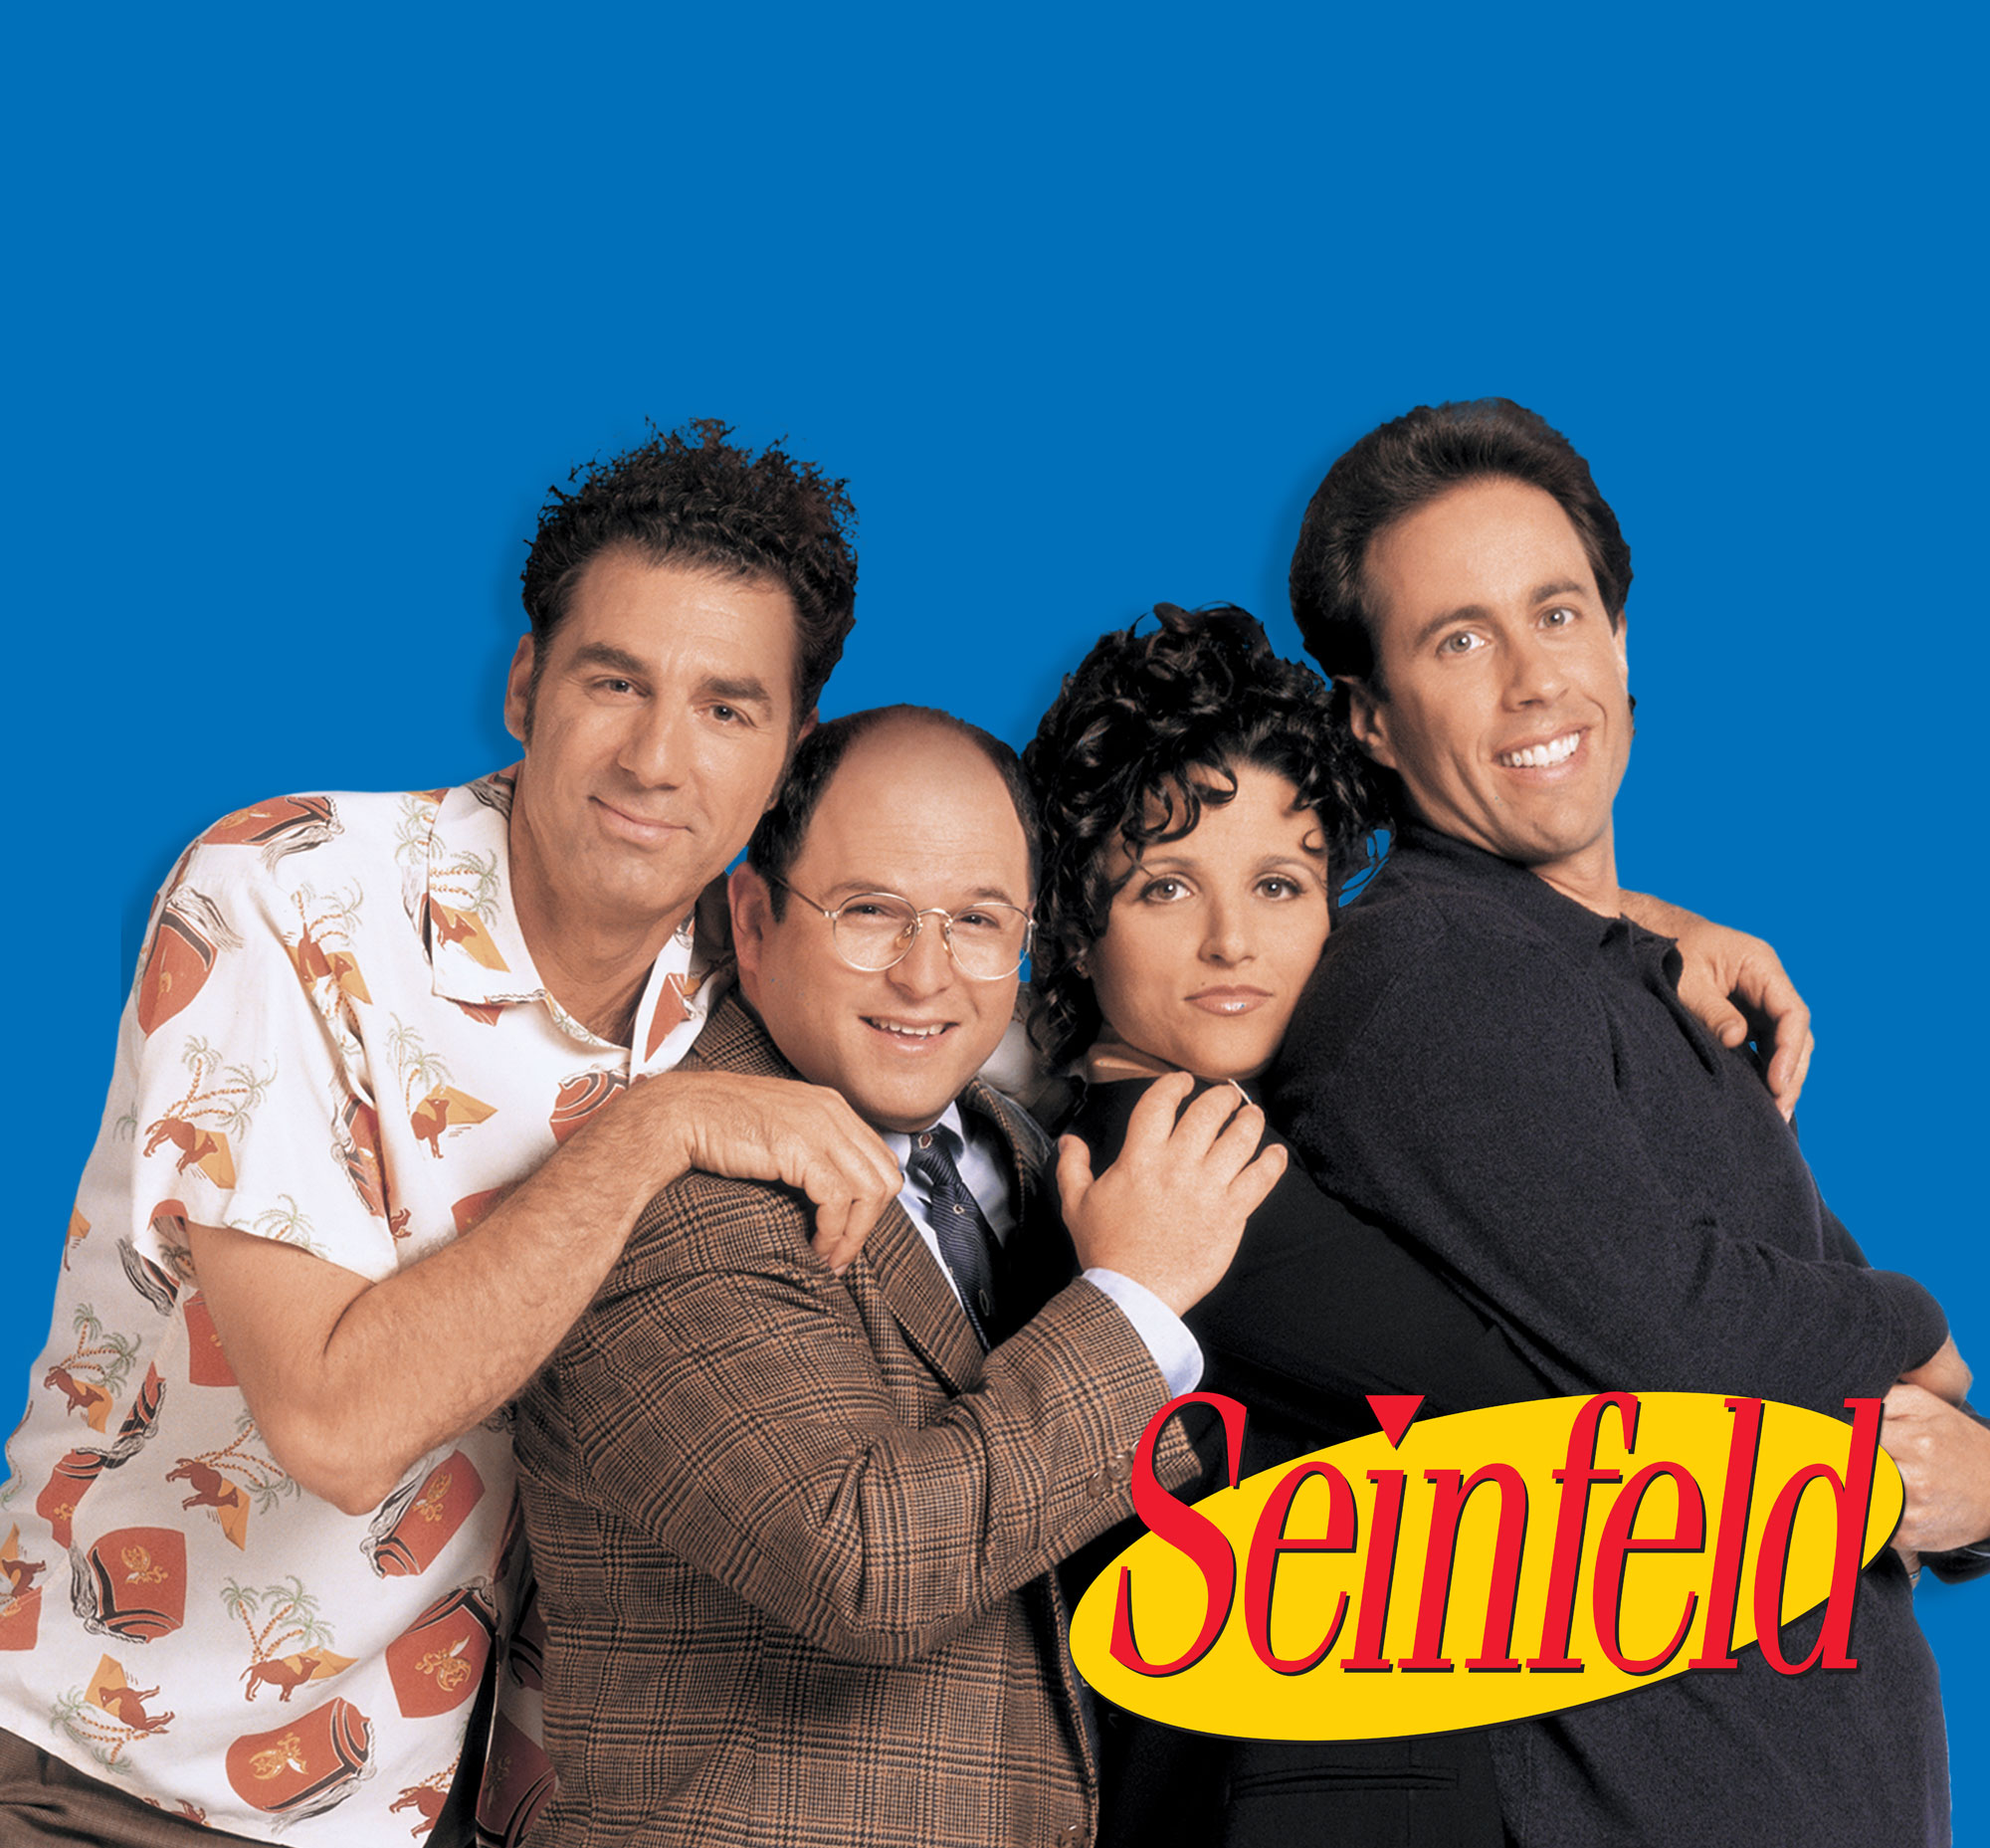 Seinfeld Backgrounds, Compatible - PC, Mobile, Gadgets| 2000x1857 px